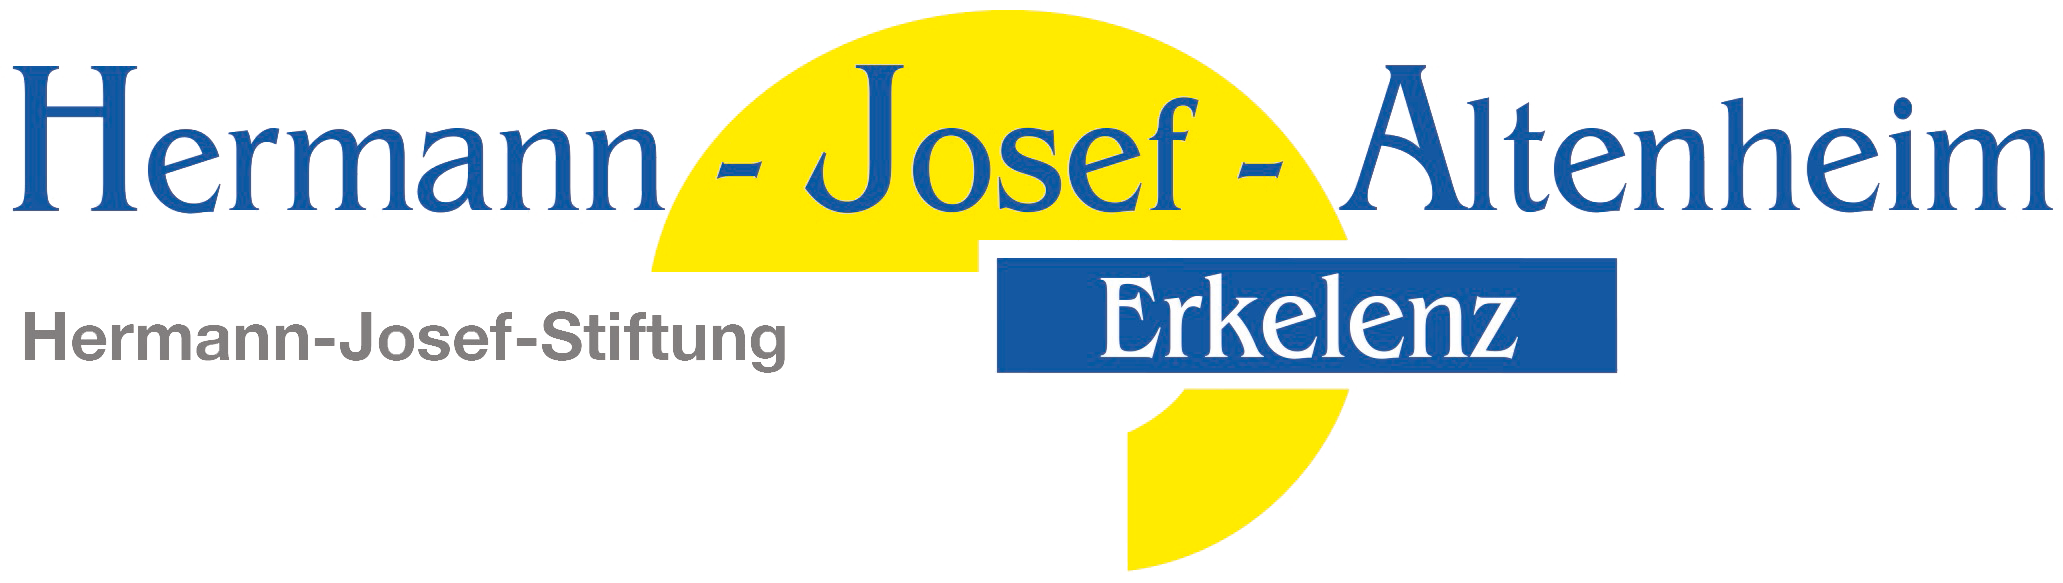 Hermann-Josef-Krankenhaus Erkelenz LOGO